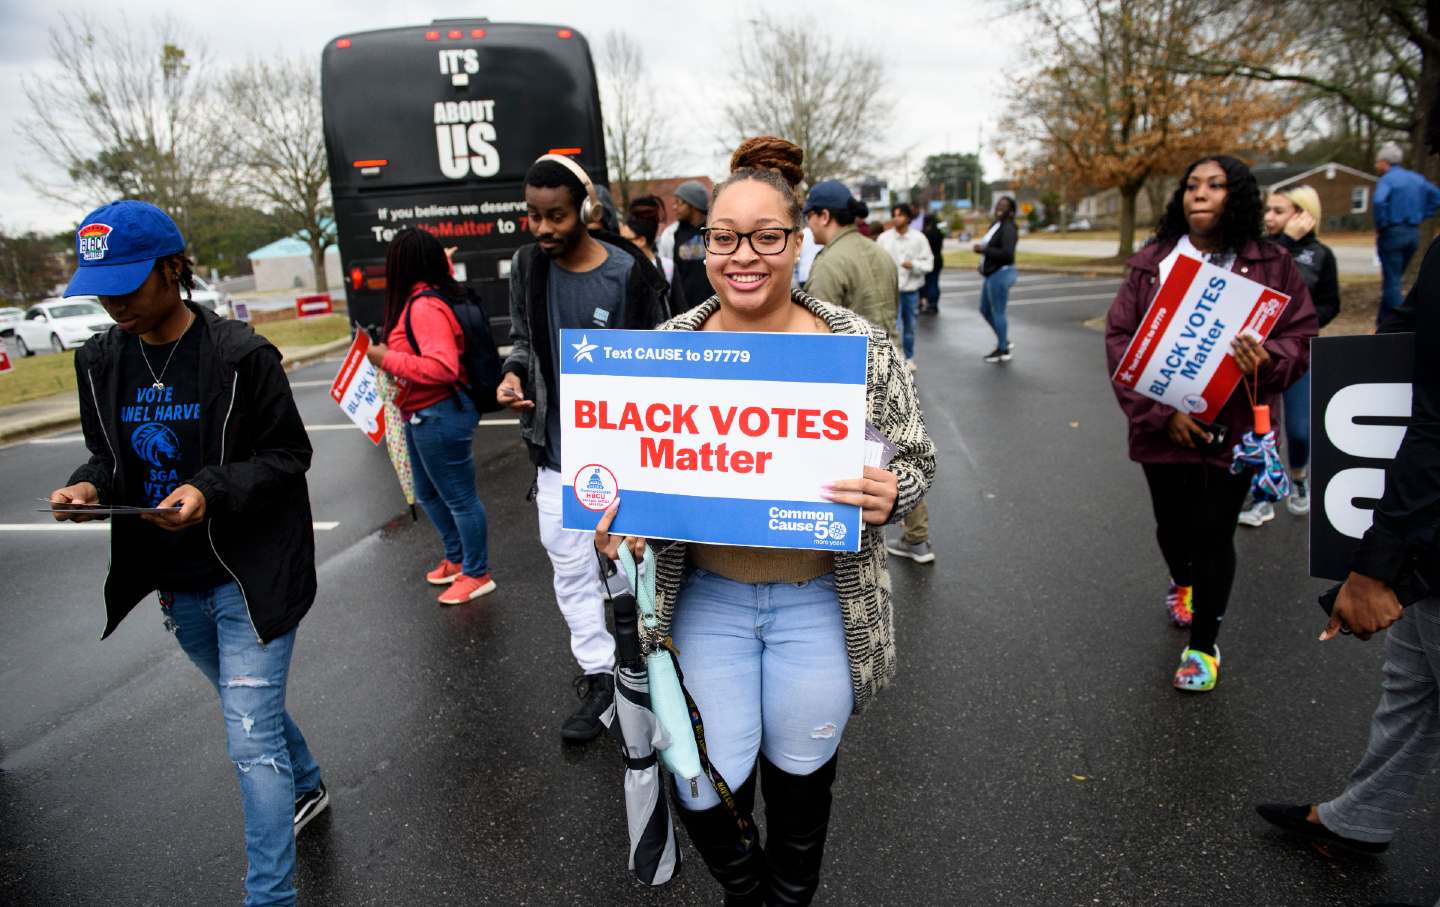 Students promote black voter engagement